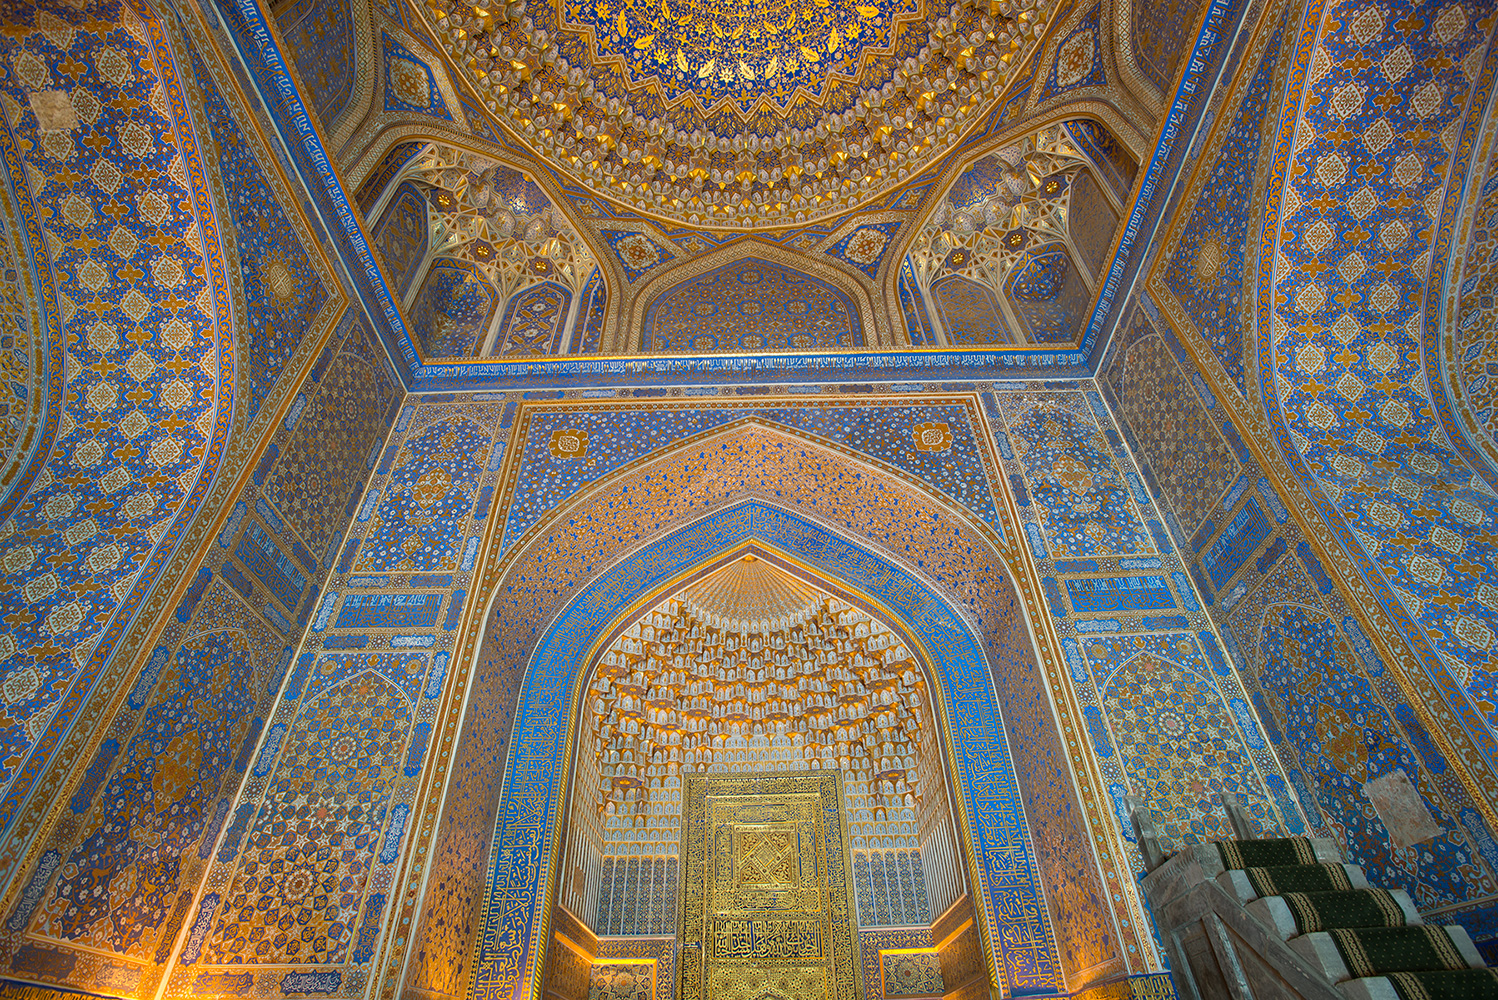 The mosque interior